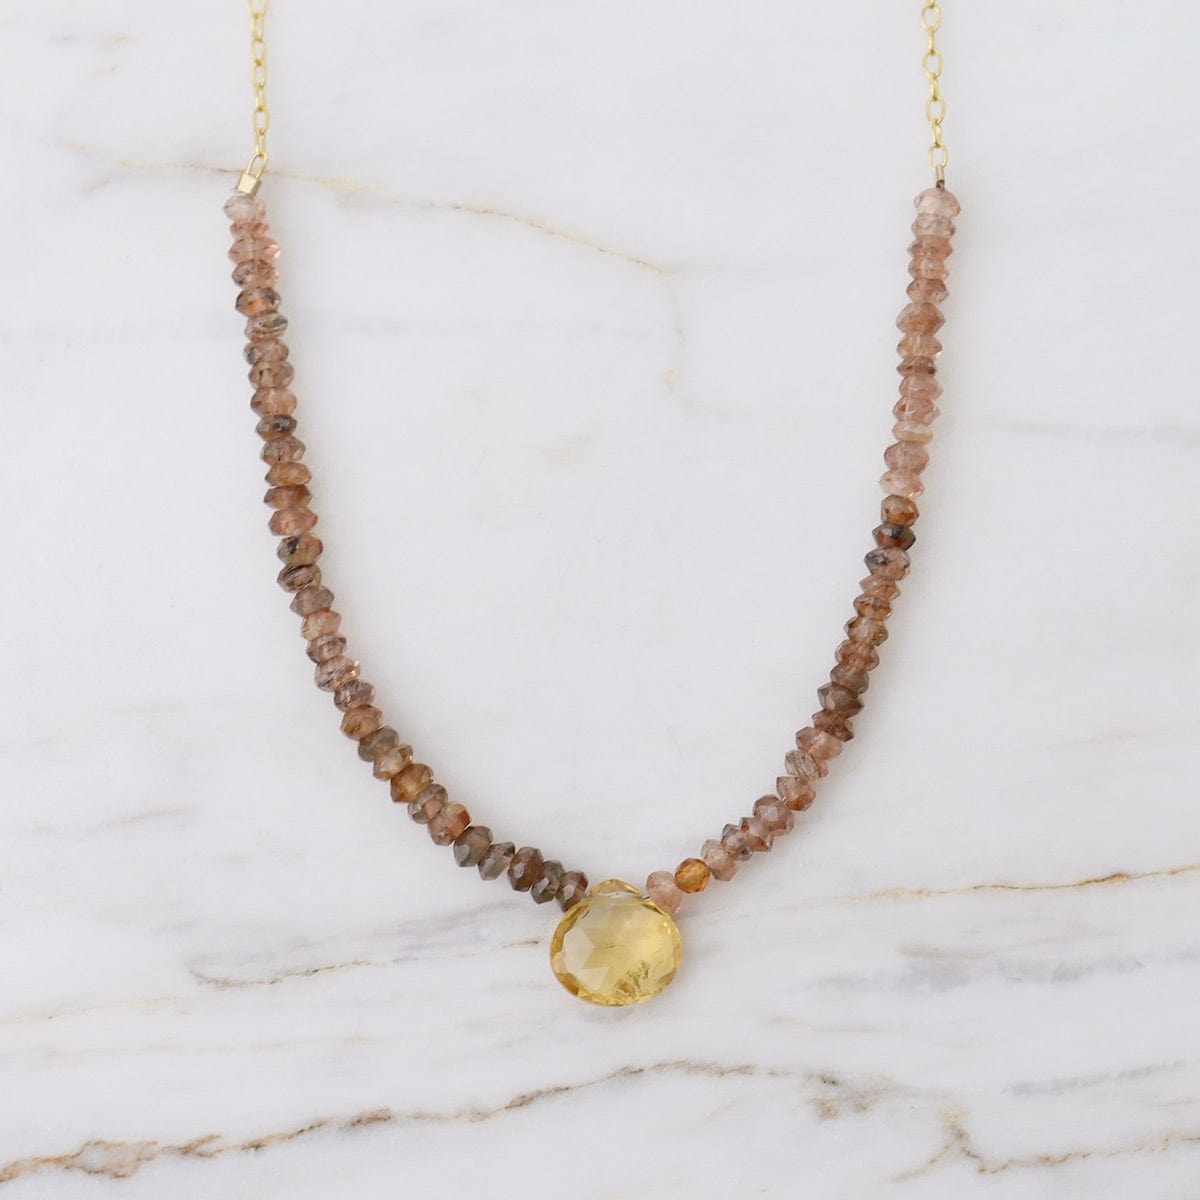 NKL-GF Gold Filled Necklace with Gemstone Arc & Briolette Drop - Rutilated Quartz & Citrine